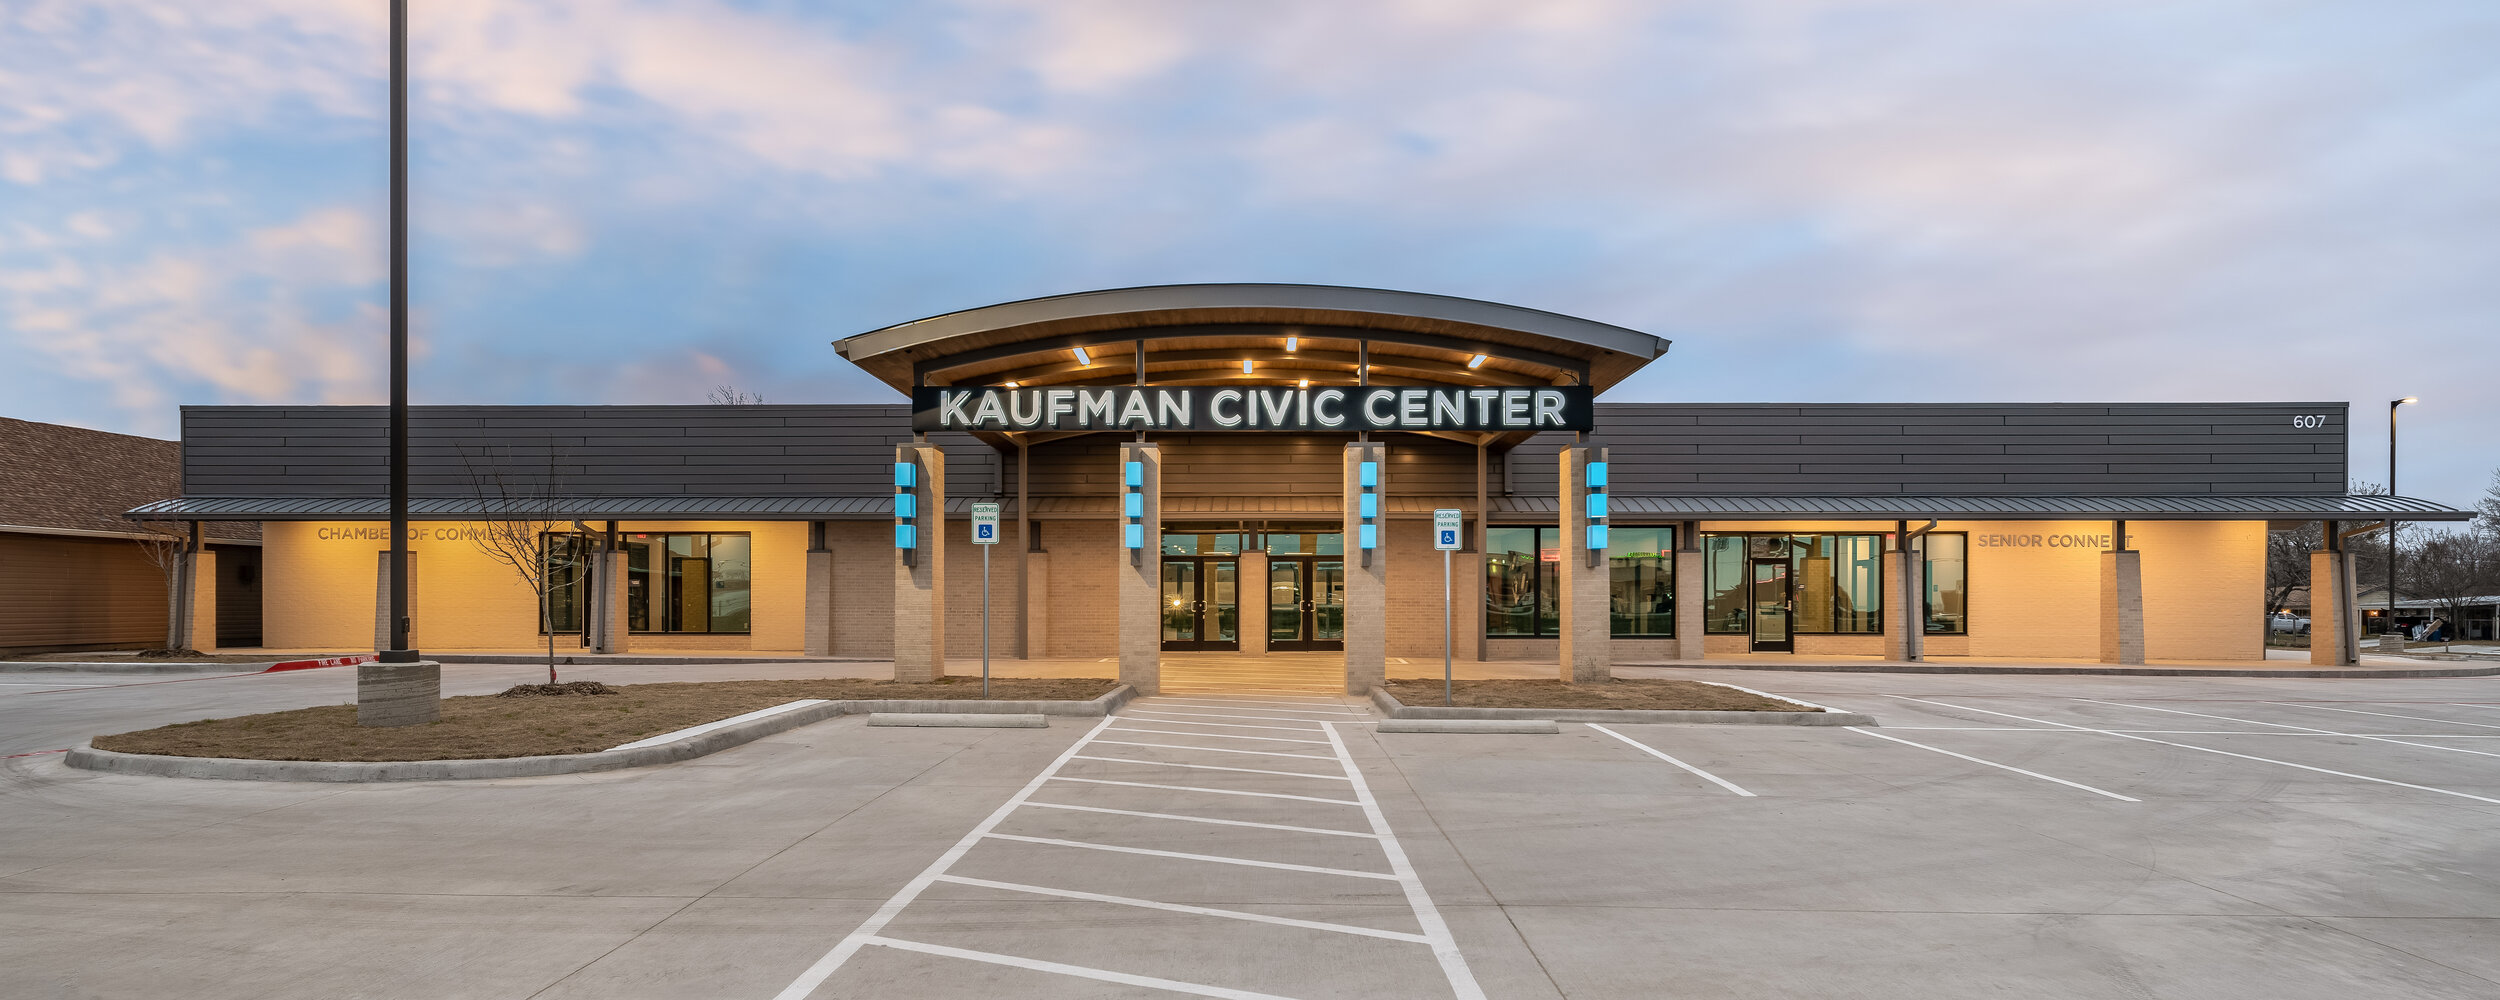 Kaufman Civic Center-18-4.jpg